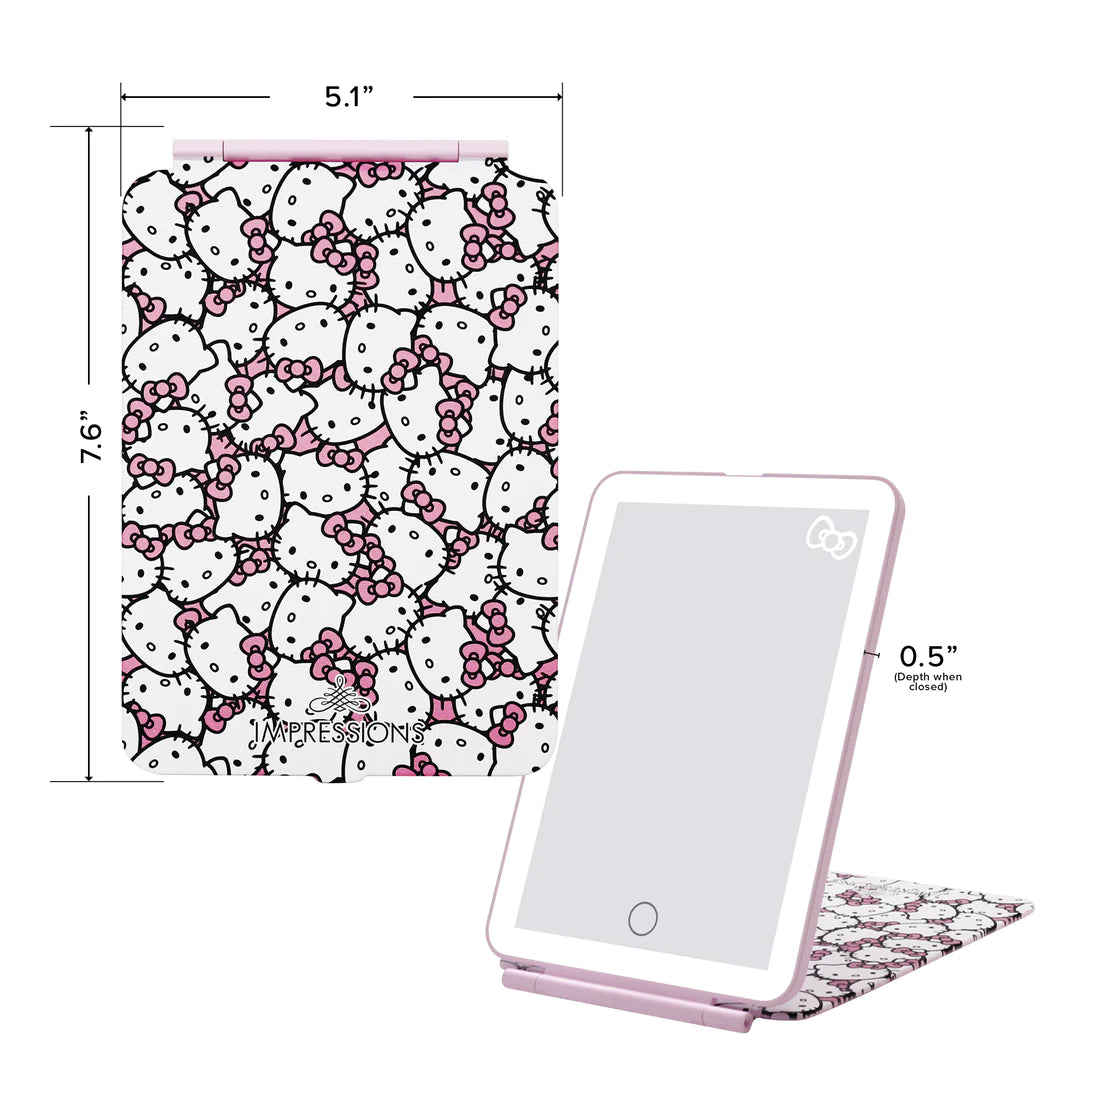 Impressions Vanity - Hello Kitty Touch Pad Mini Tri-Tone LED Makeup Mirror White/Pink